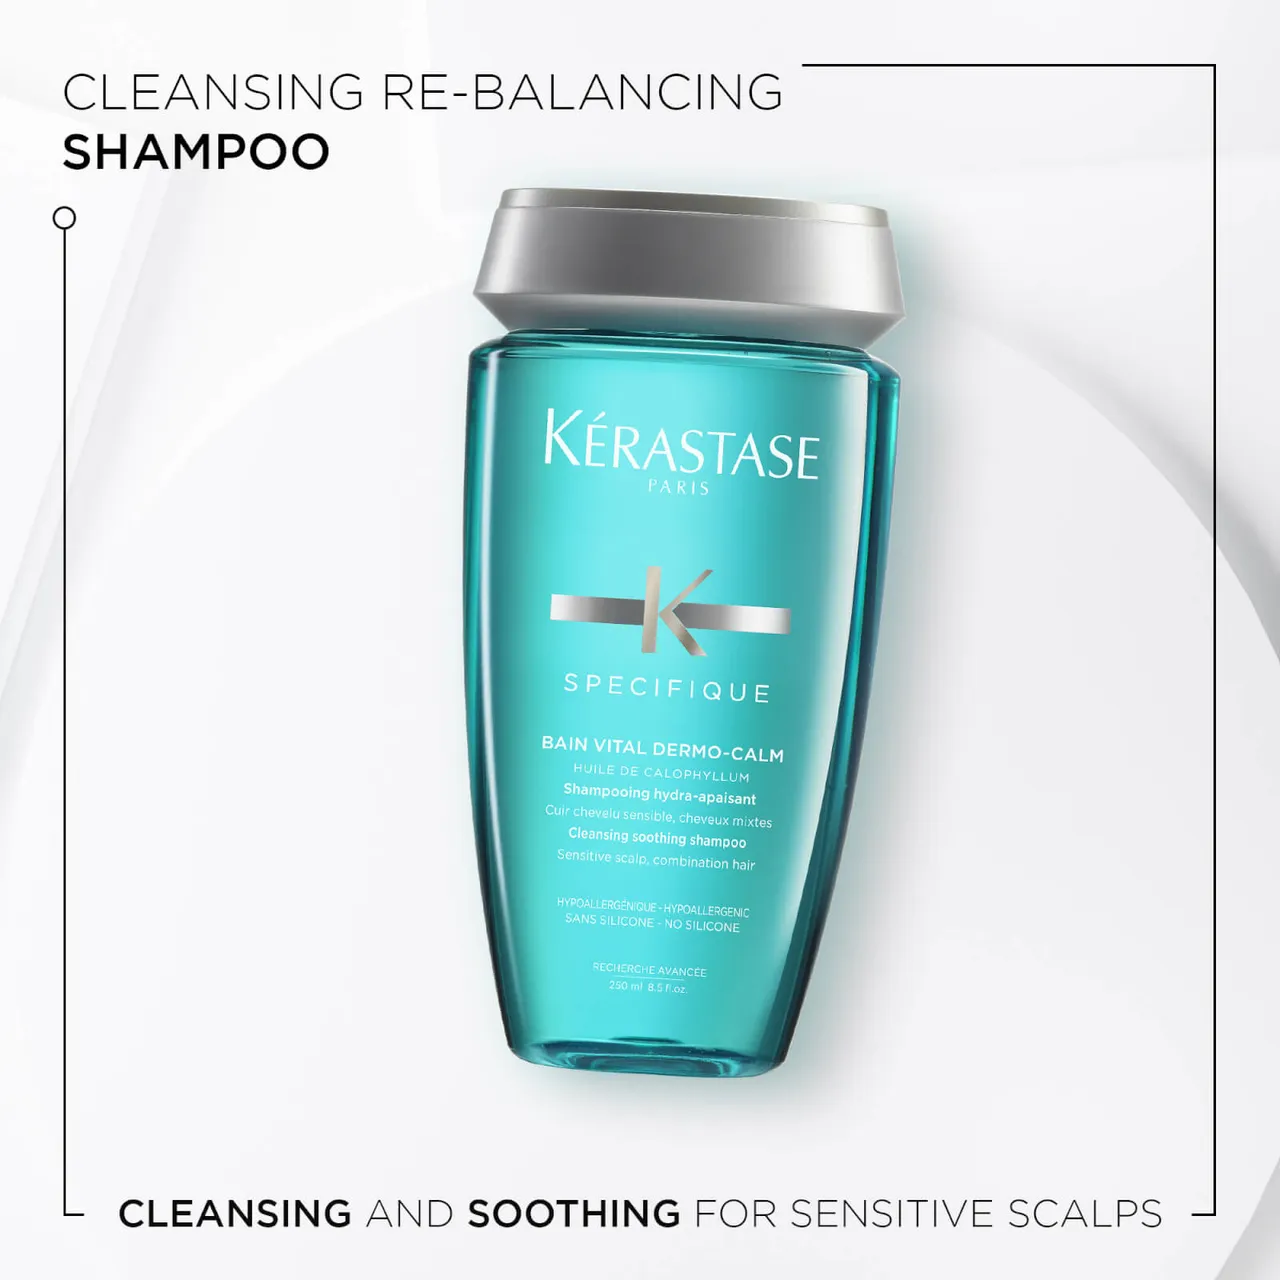 Kérastase Specifique Dermo-Calm Bain Vital Shampoo 250 ml